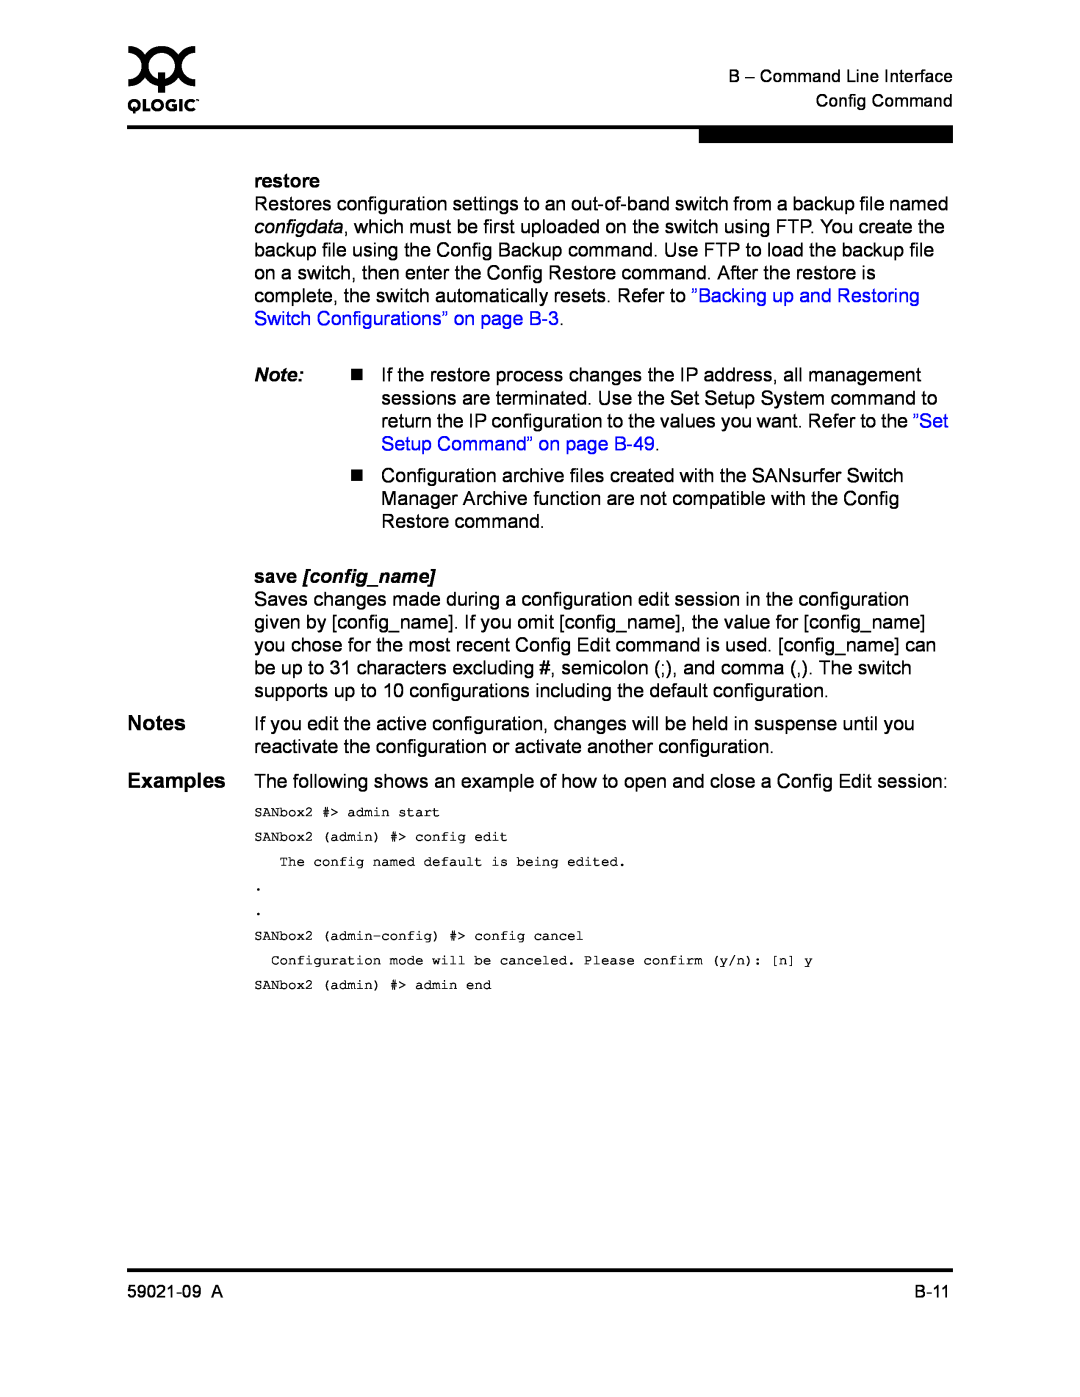 Q-Logic SB2A-16B, QLA2342 manual Setup Command” on page B-49, save configname, restore 